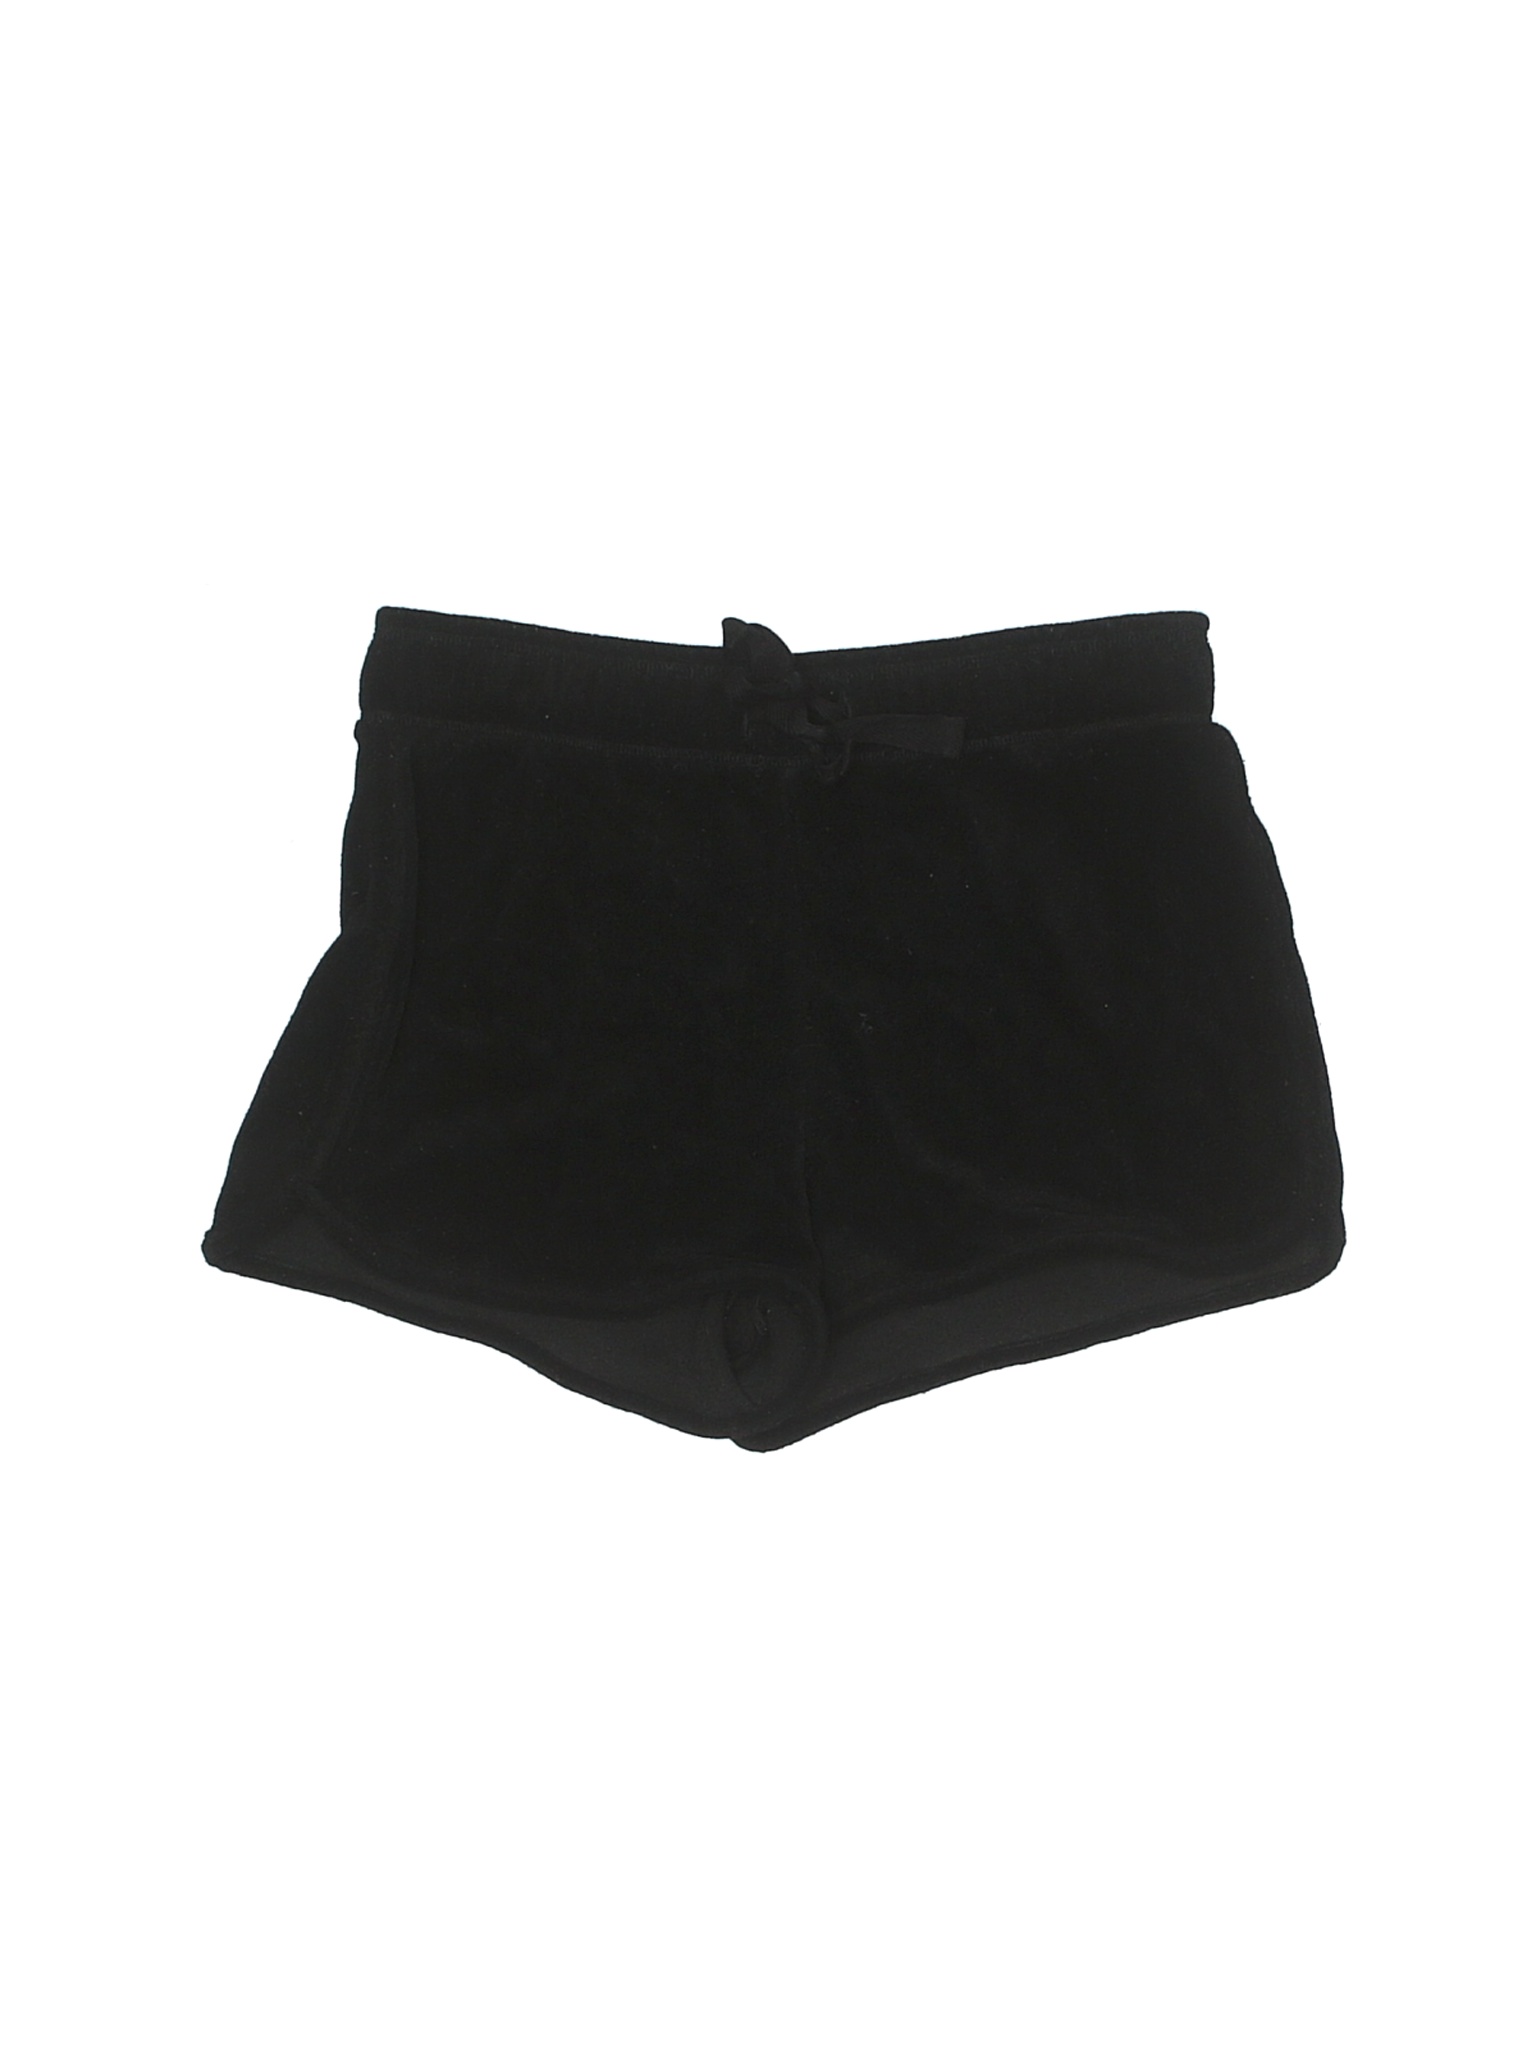 Uniqlo Women Black Shorts S | eBay